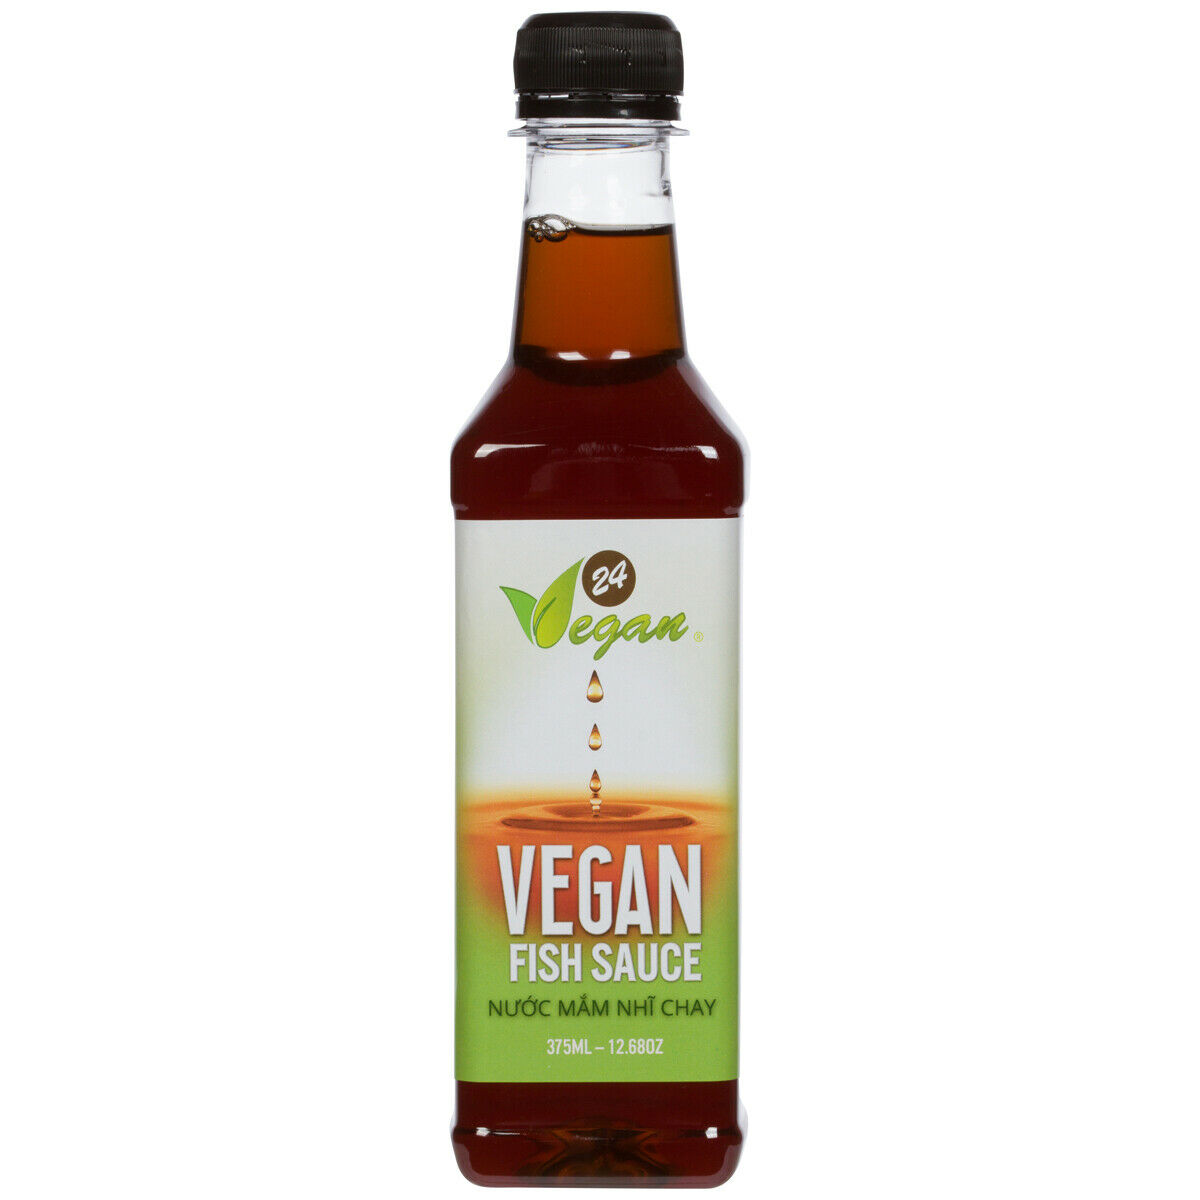 24Vegan's Vegan Fish Sauce 12.68fl oz (375ml) Vegetarian & Vegan Vietnamese Made